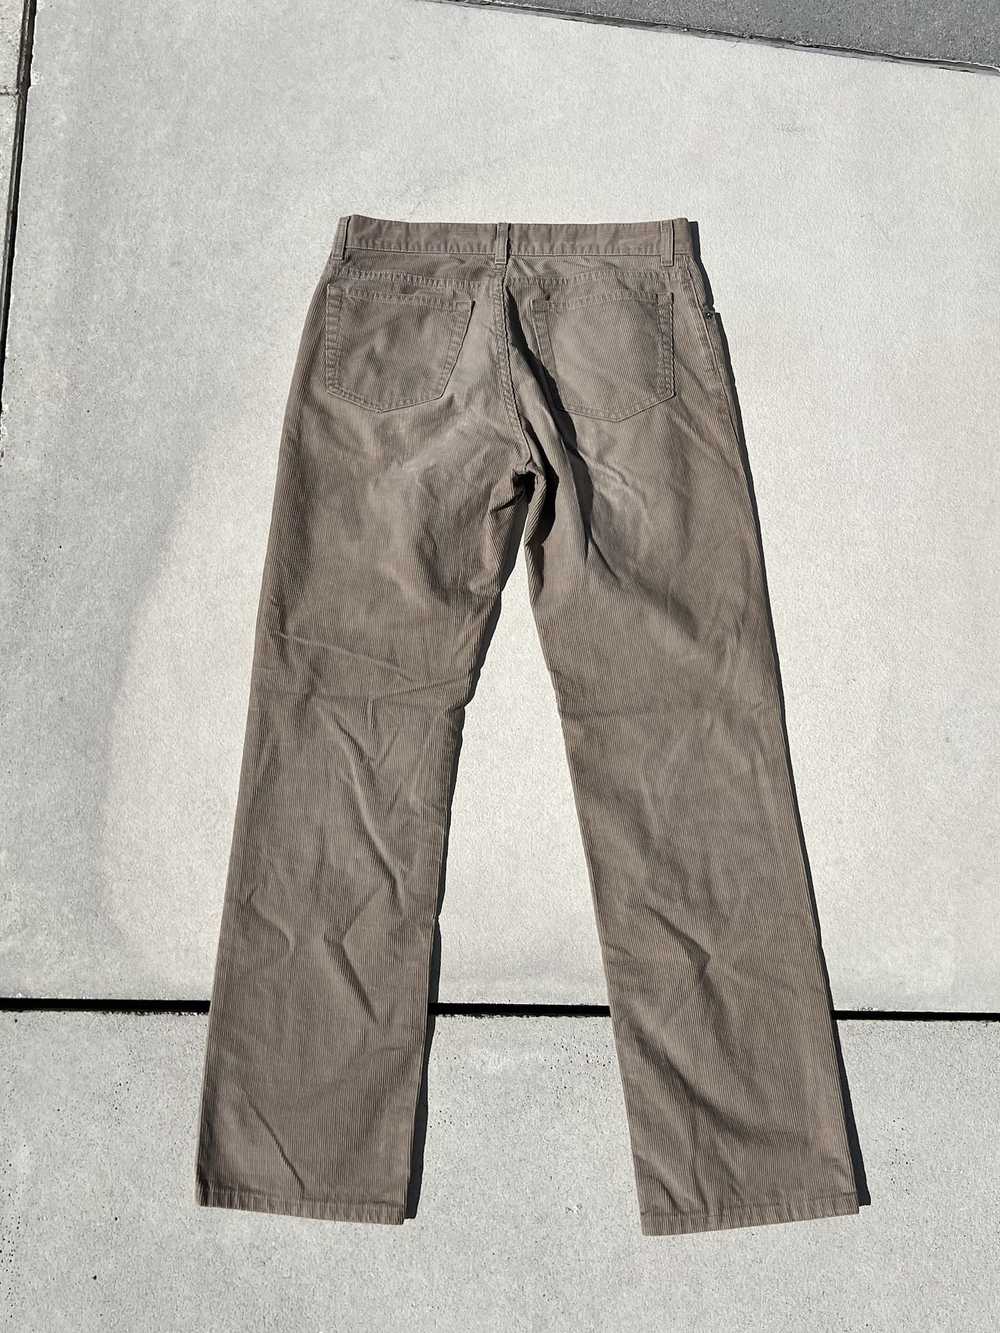 Helmut Lang Helmut Lang Vintage Corduroy Pants - image 5